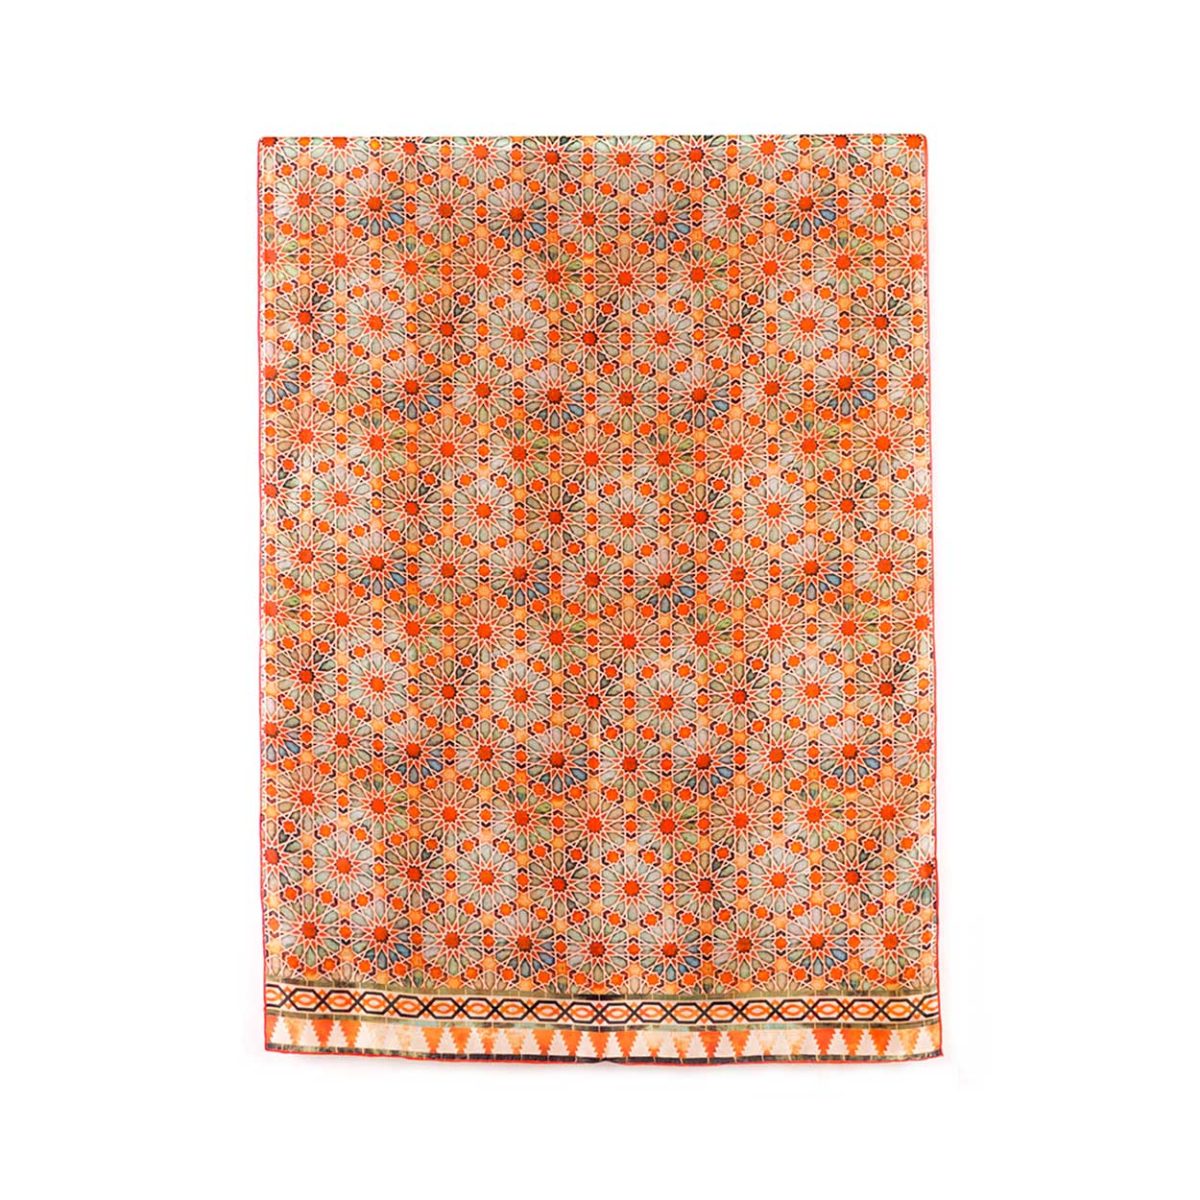 Large orange silk scarf featuring islamic art print